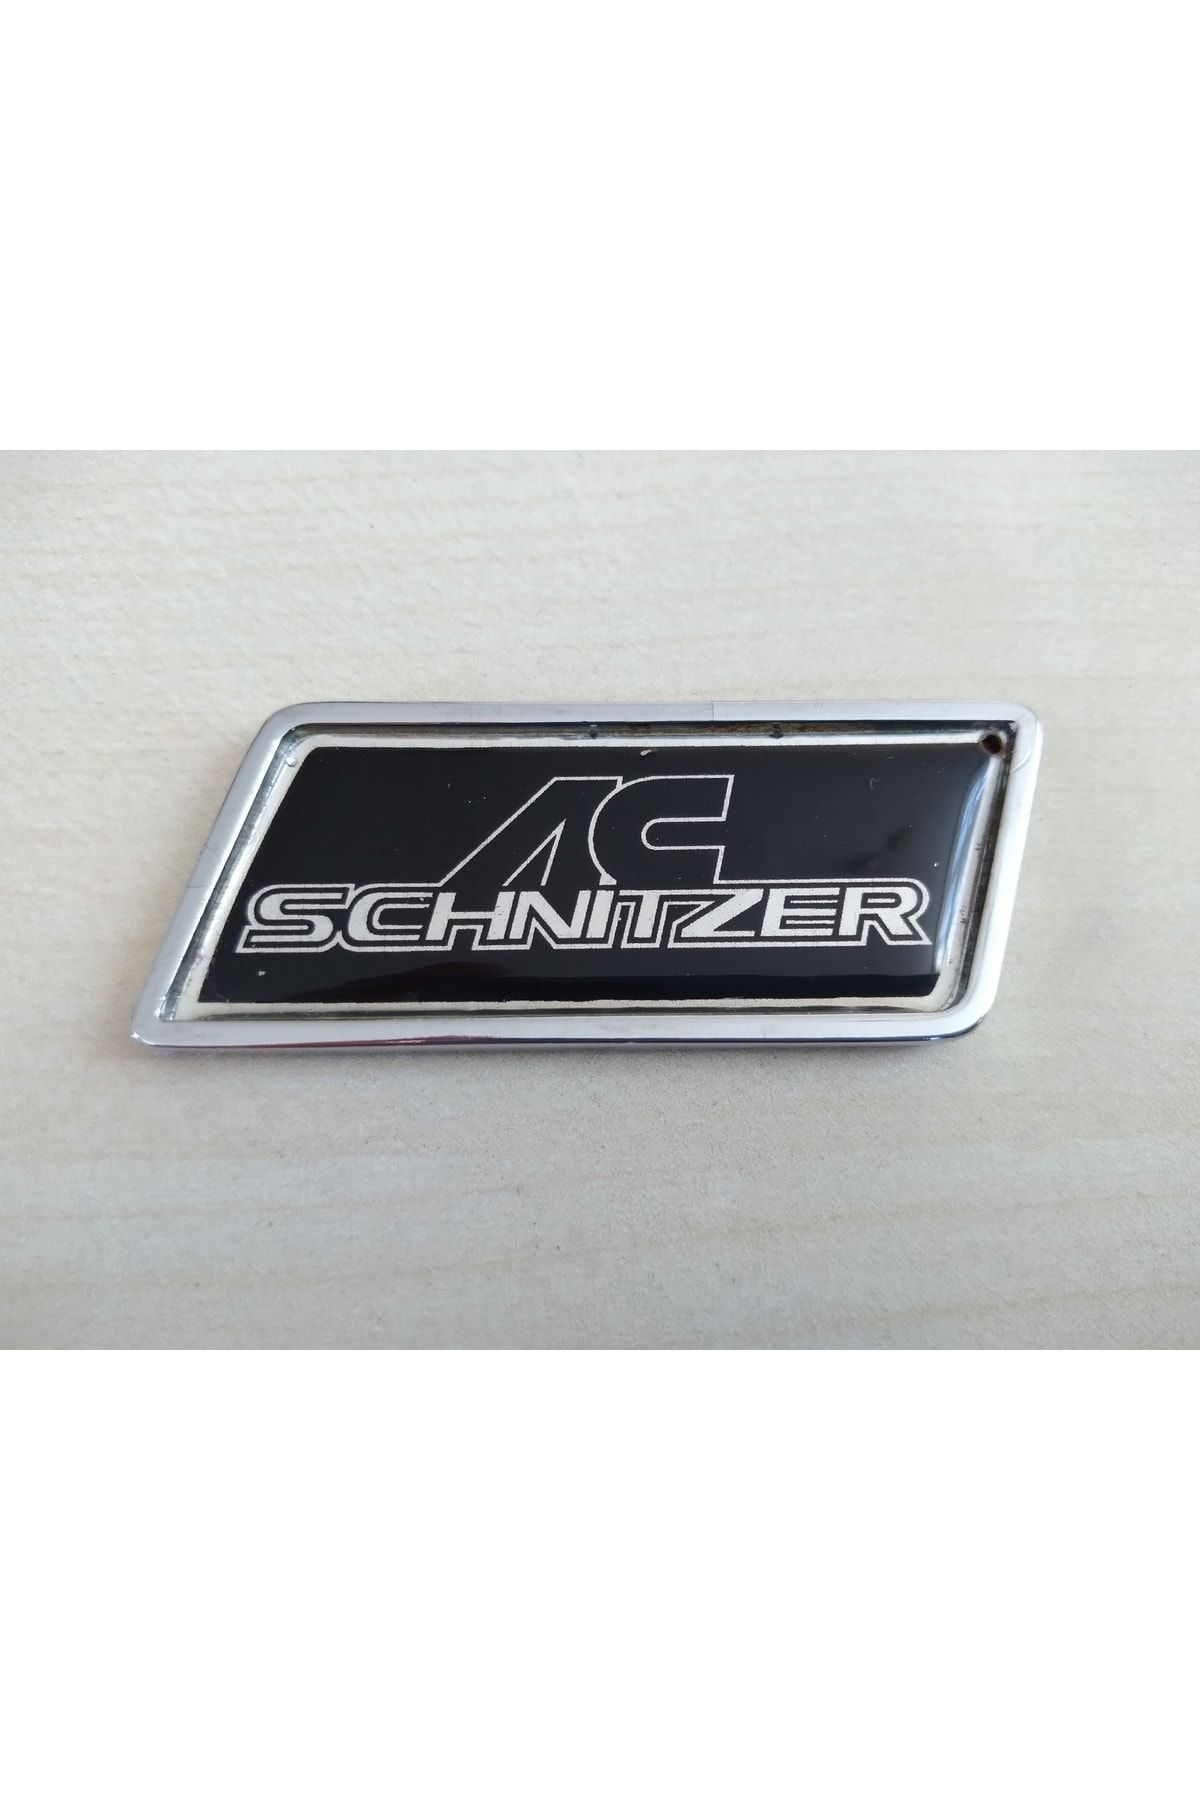 Sportline Sport Schnitzer Yazısı - Schnitzer Çamurluk Logosu - Schnitzer Bagaj Logosu Schnitzer Arması Etiketi